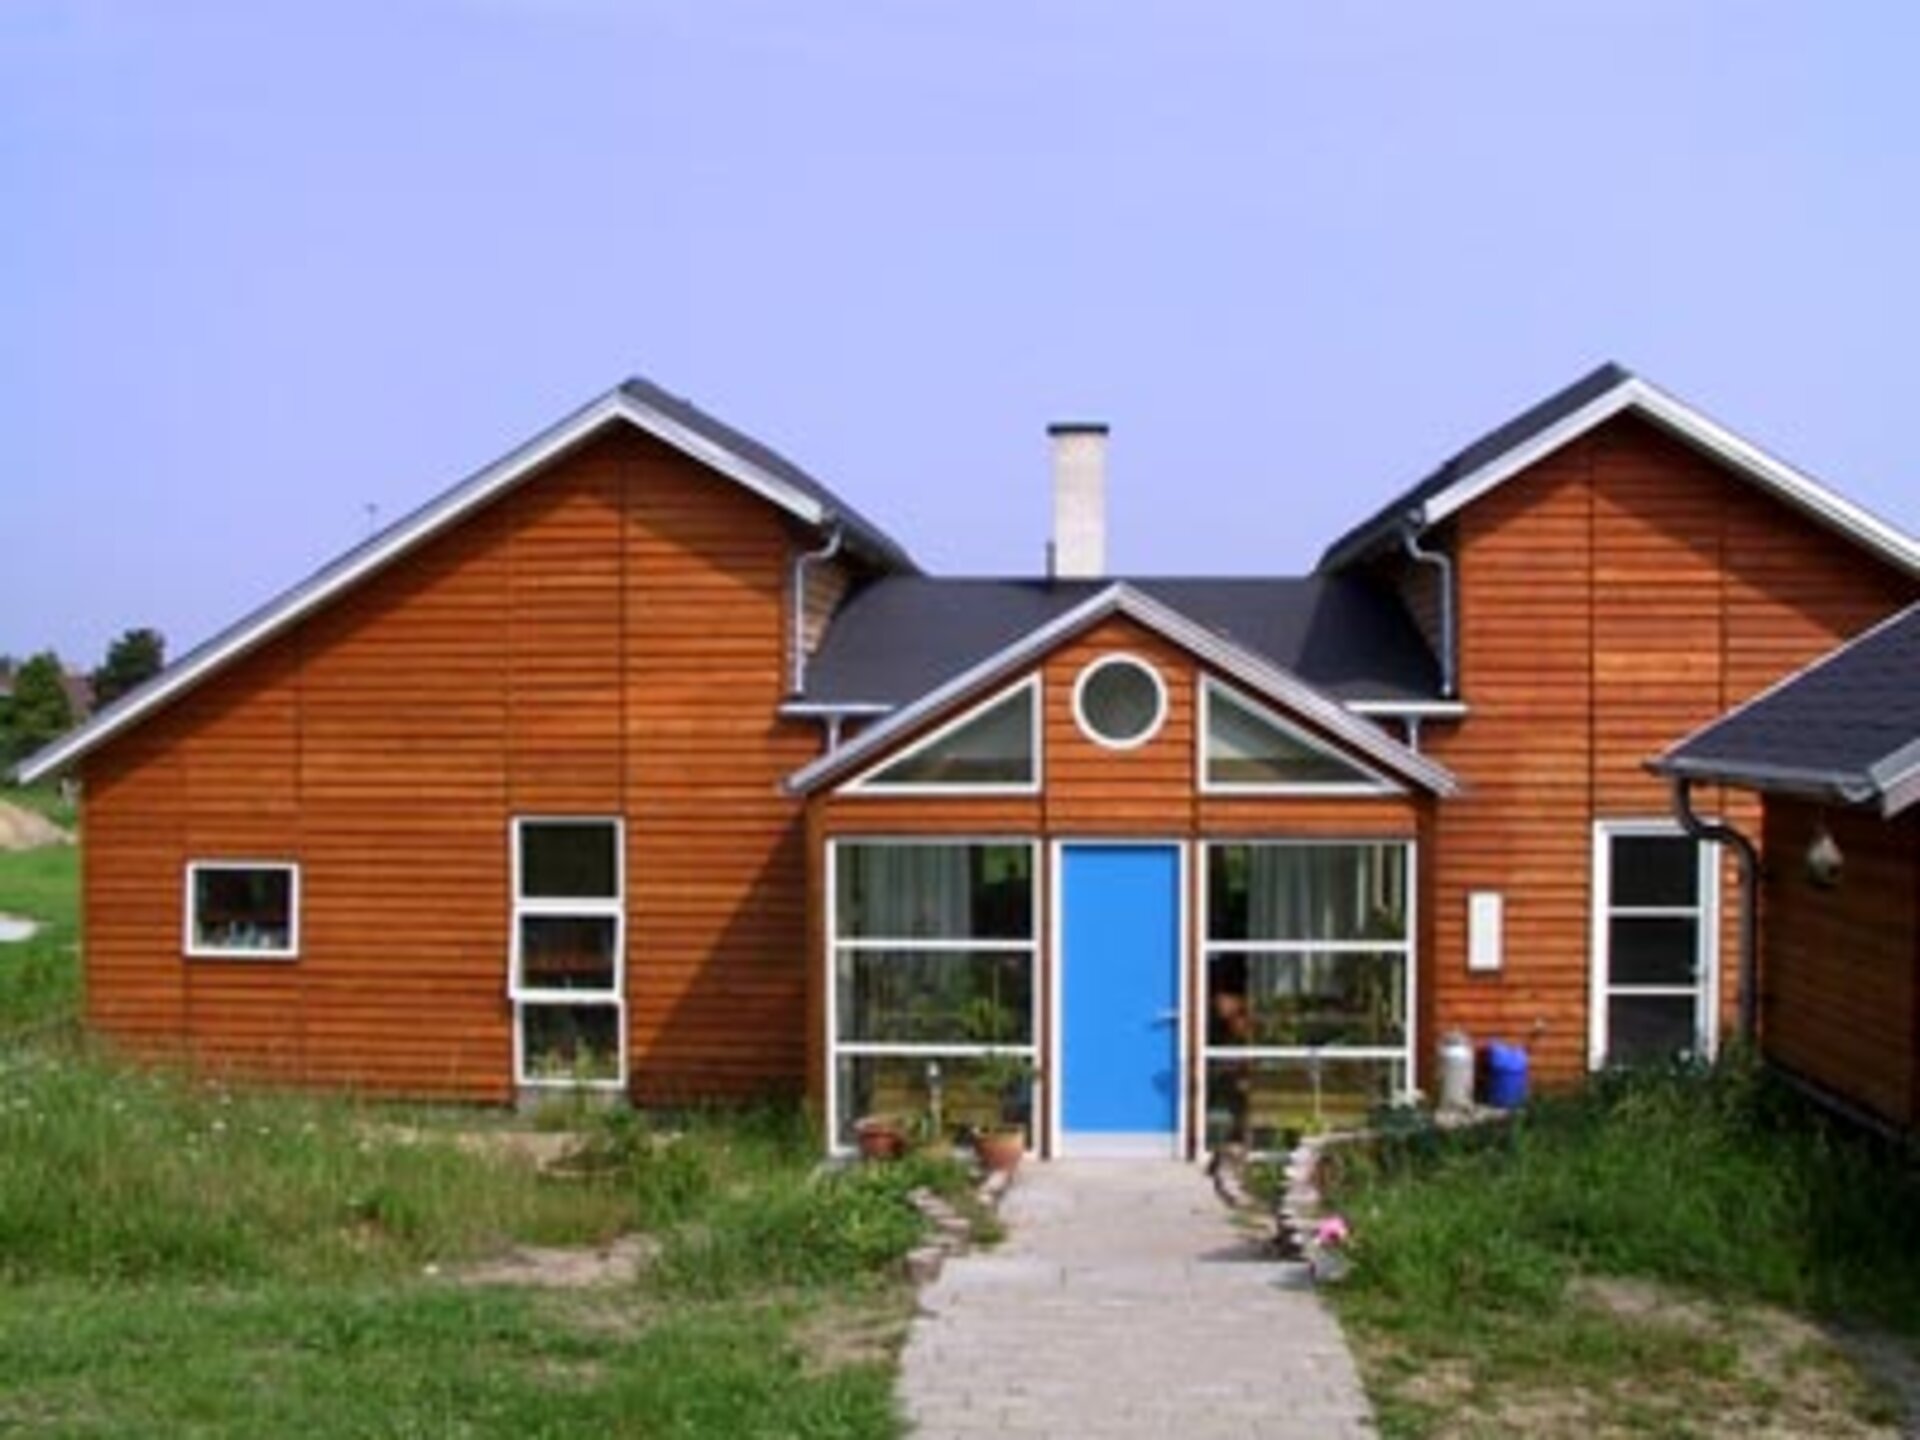 Danish house built of wood